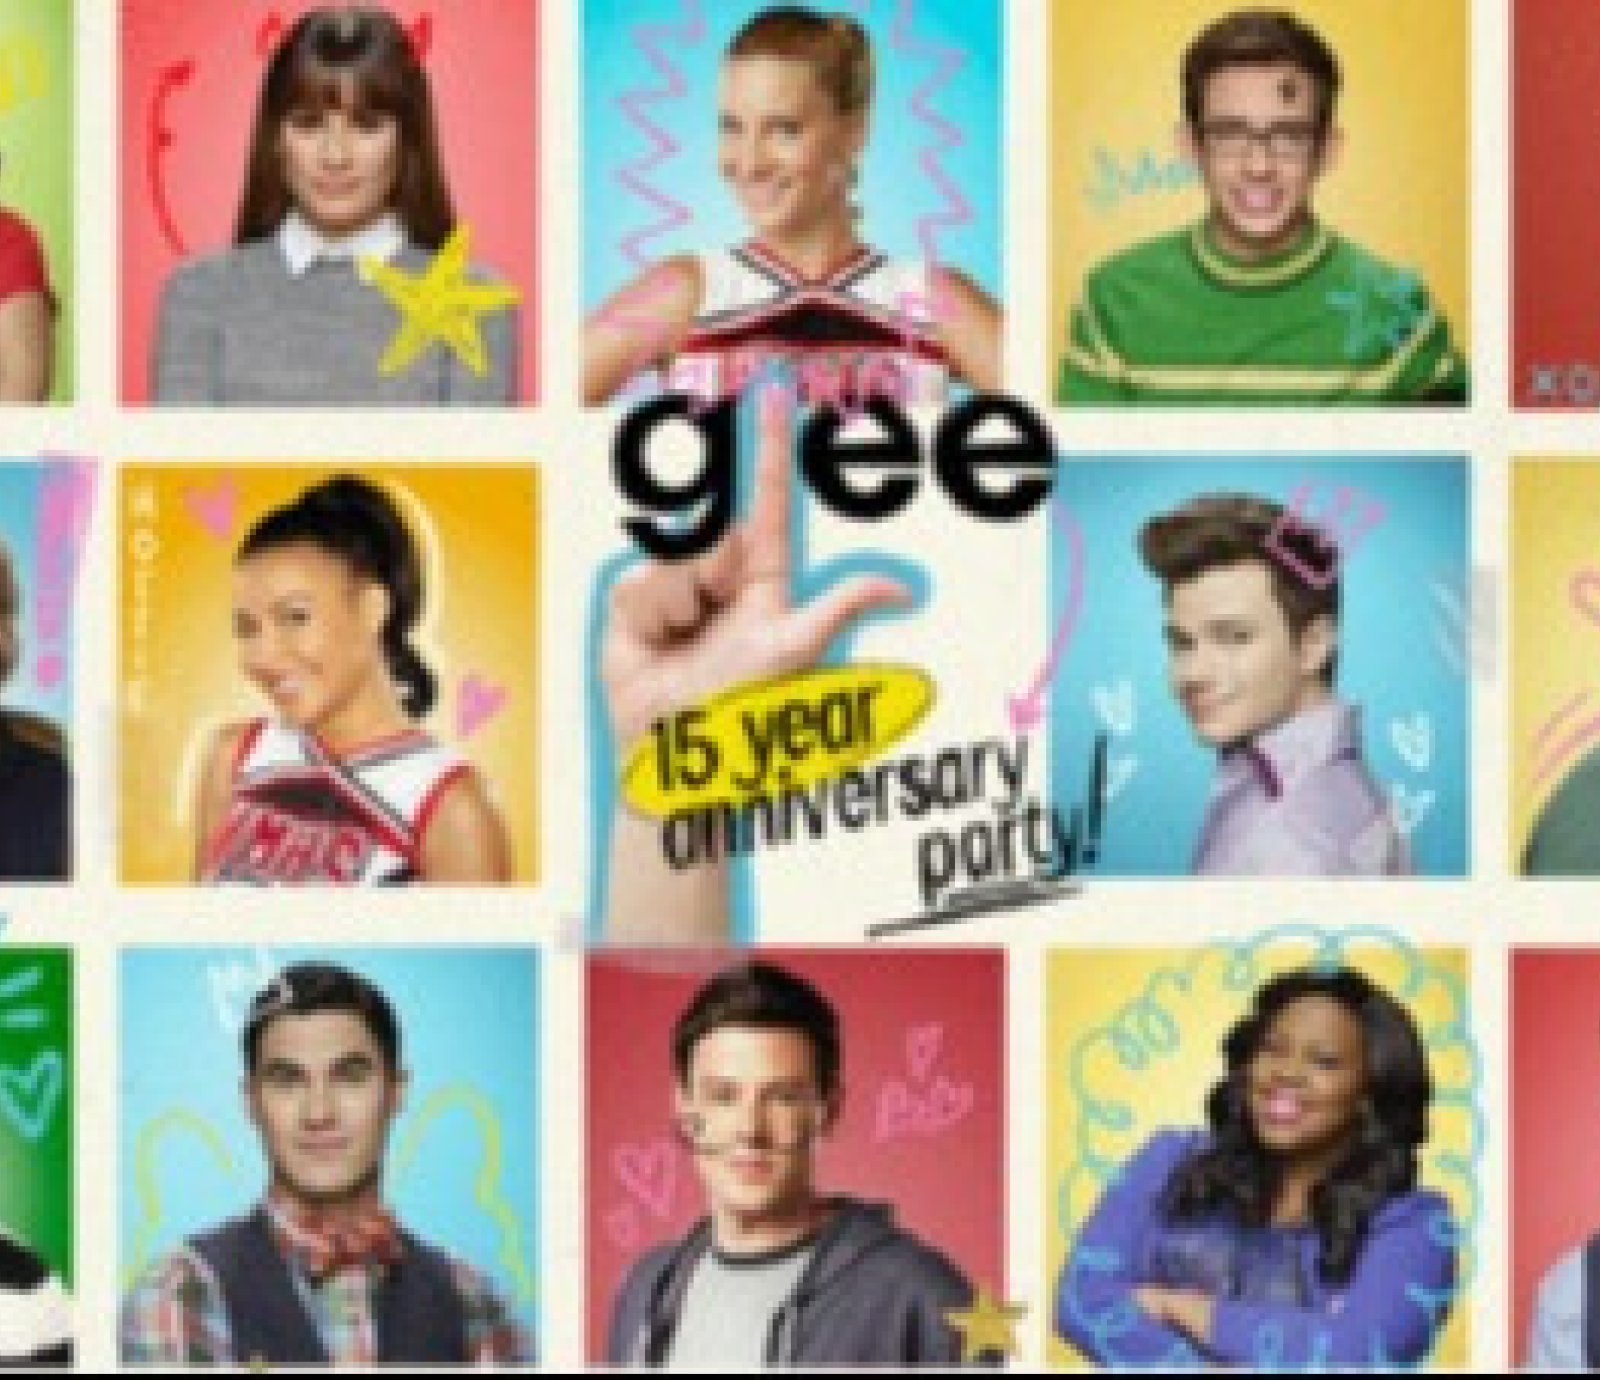 Glee: 15 Year Anniversary Party